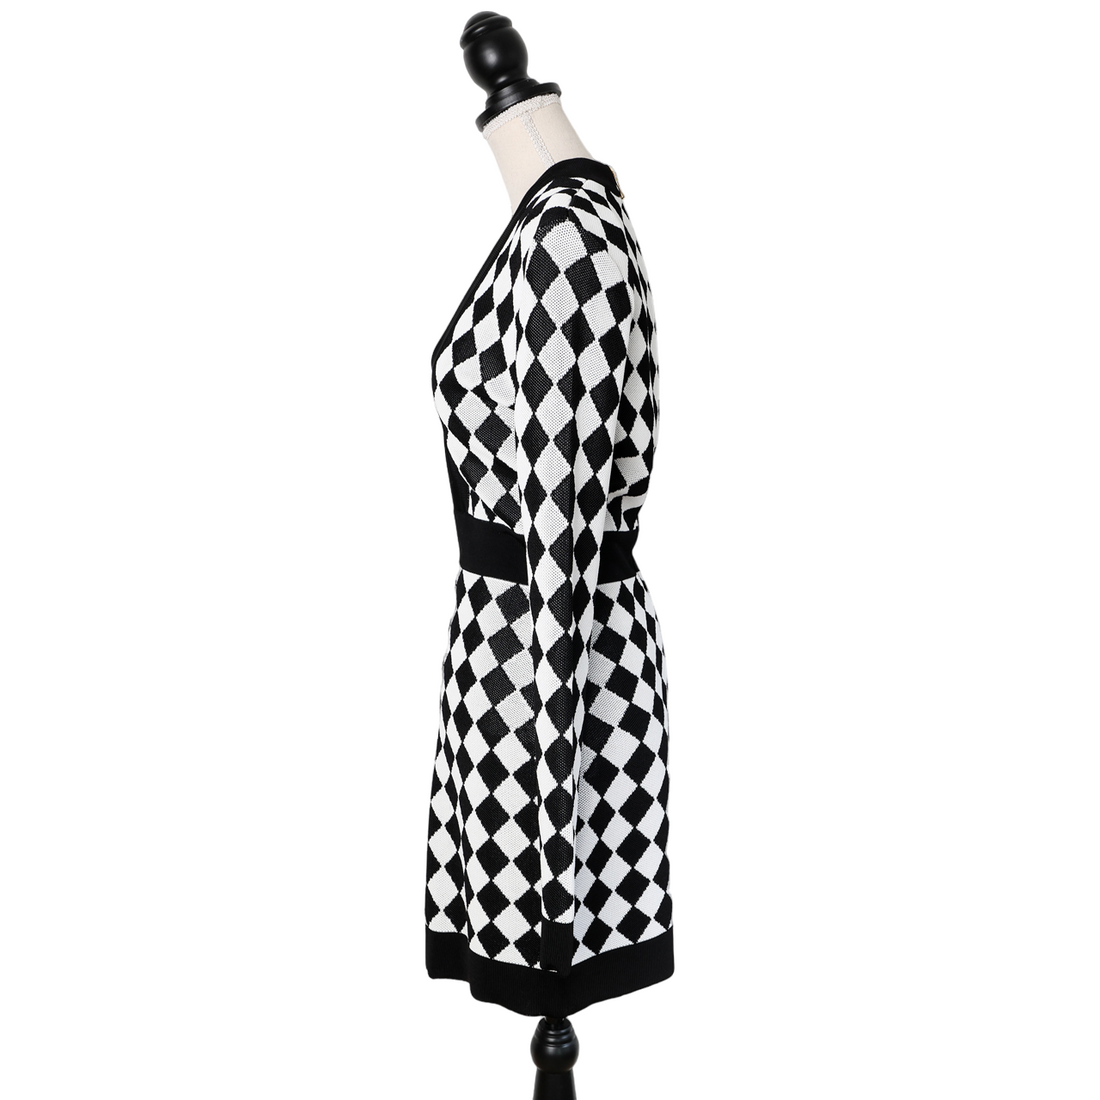 Balmain Bodycon Dress in checkerboard pattern